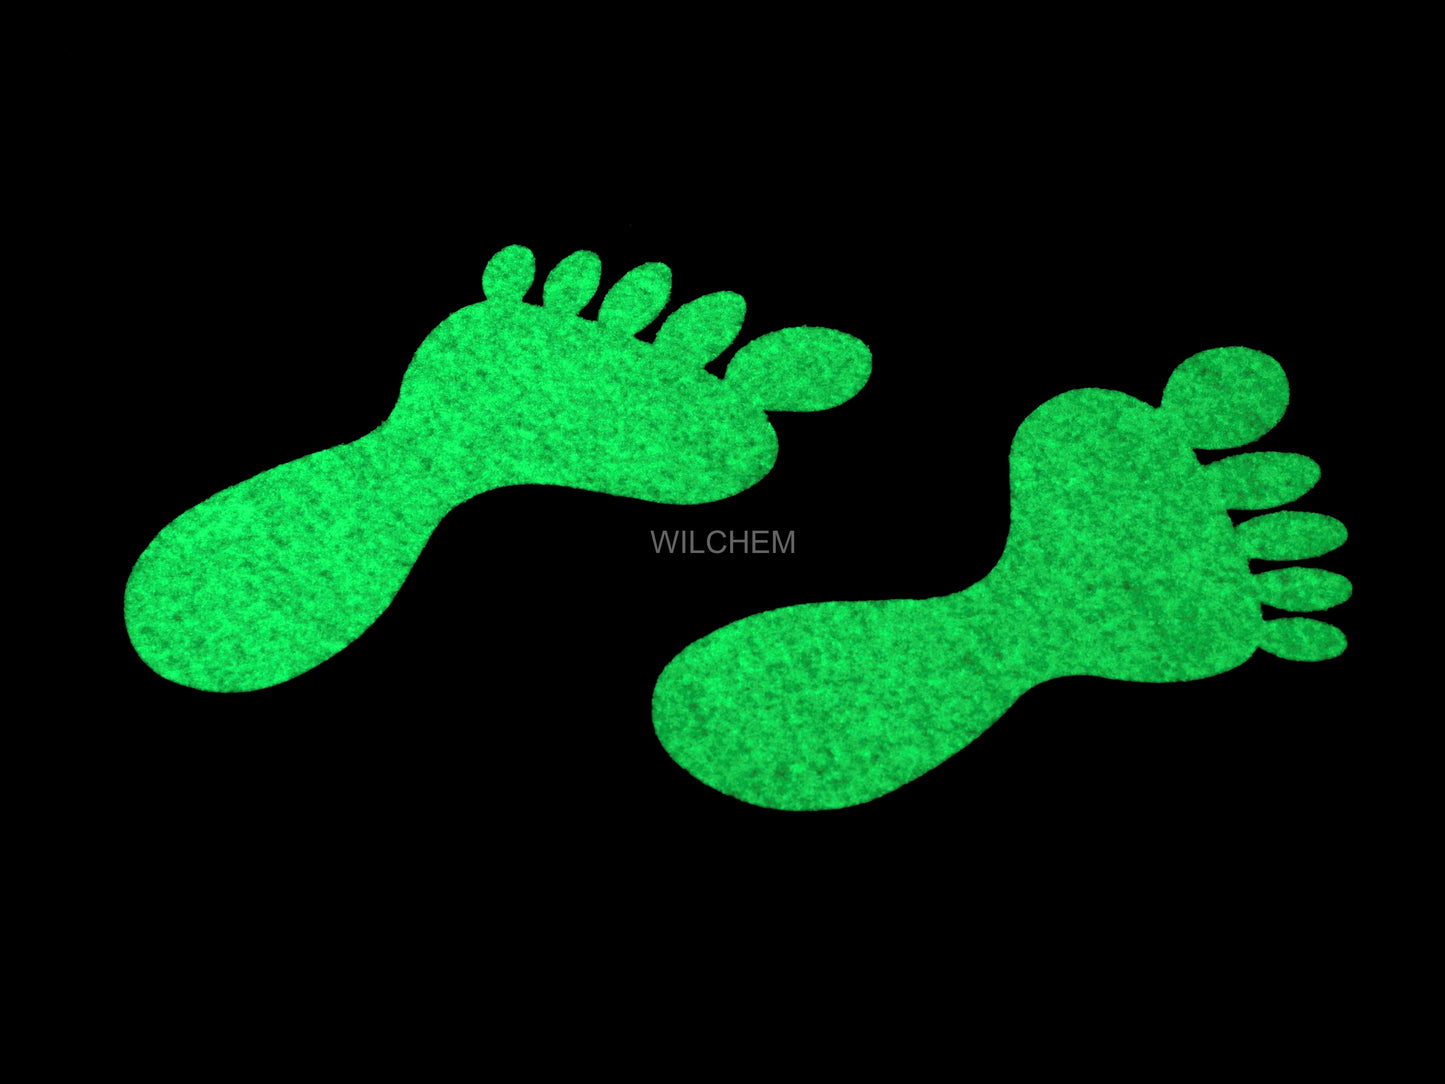 Boot Shoe or Feet Print Glow In The Dark Self Adhesive